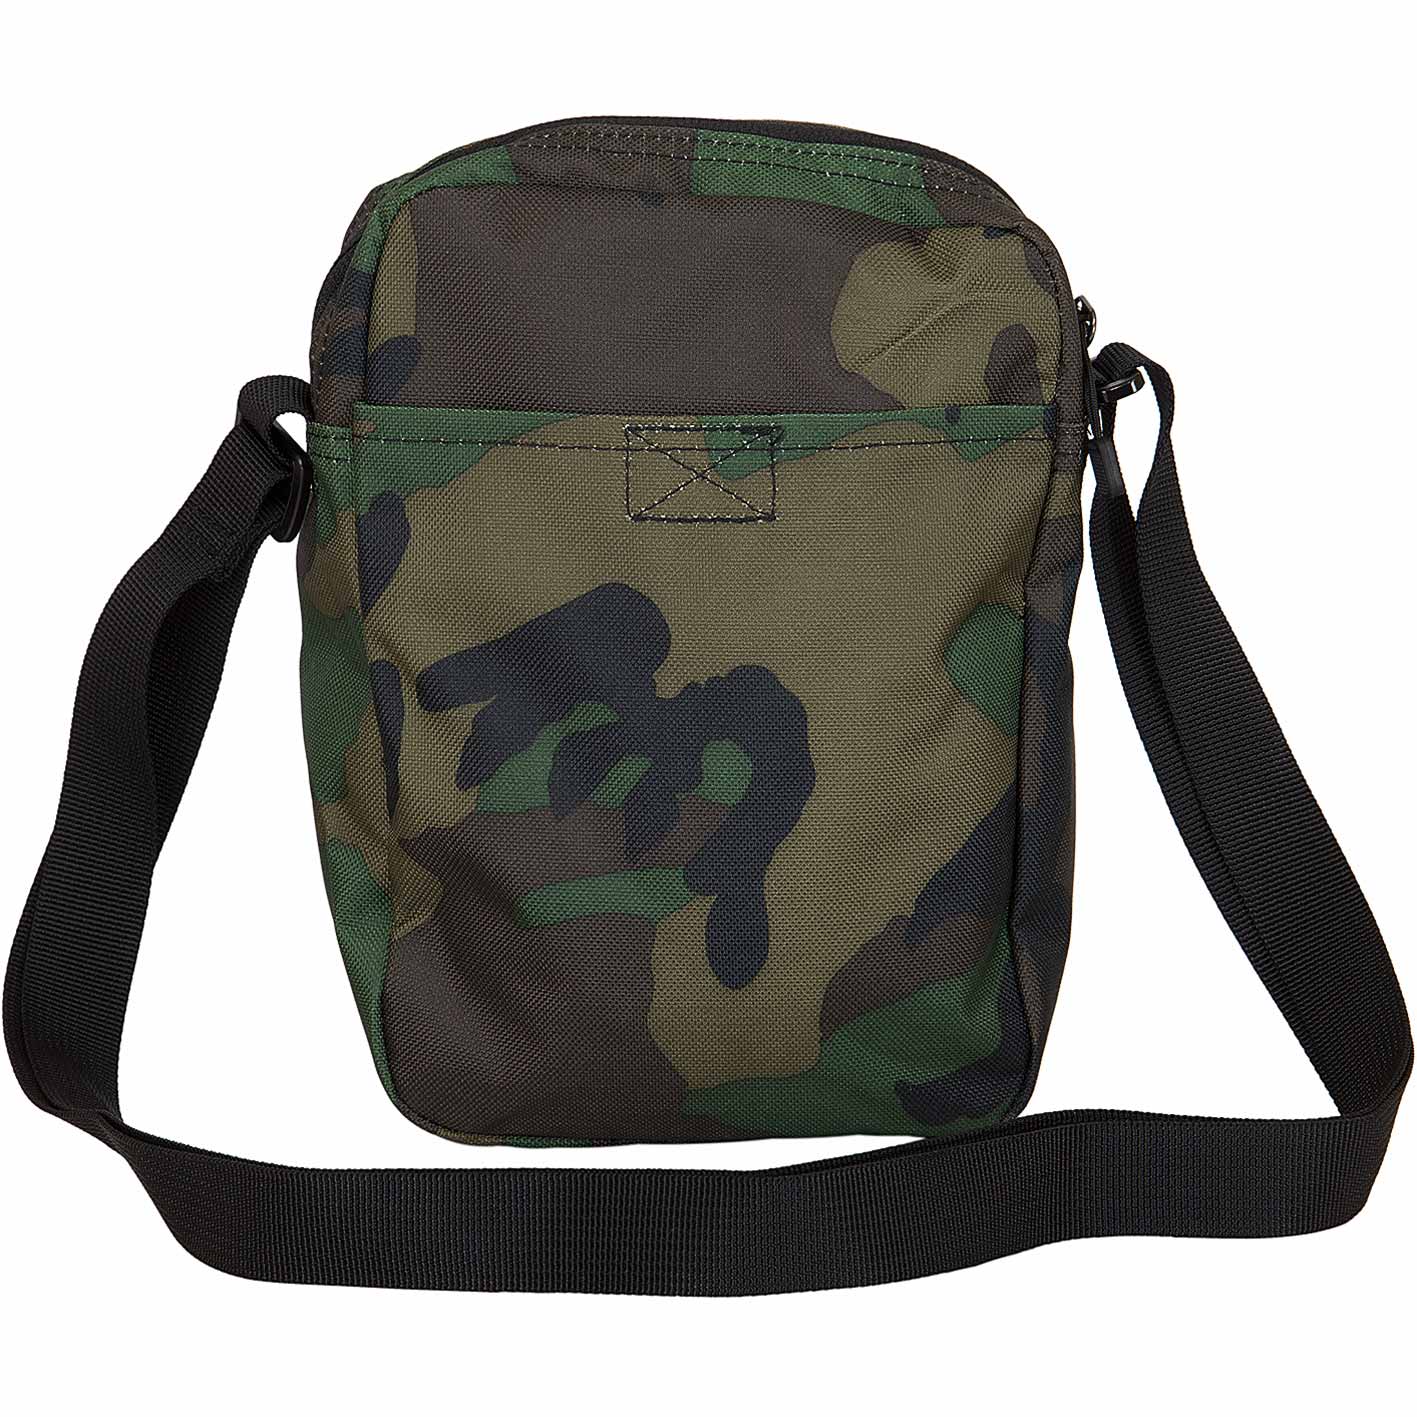 ☆ Nike Mini Tasche SB Heritage AOP camouflage - hier bestellen!